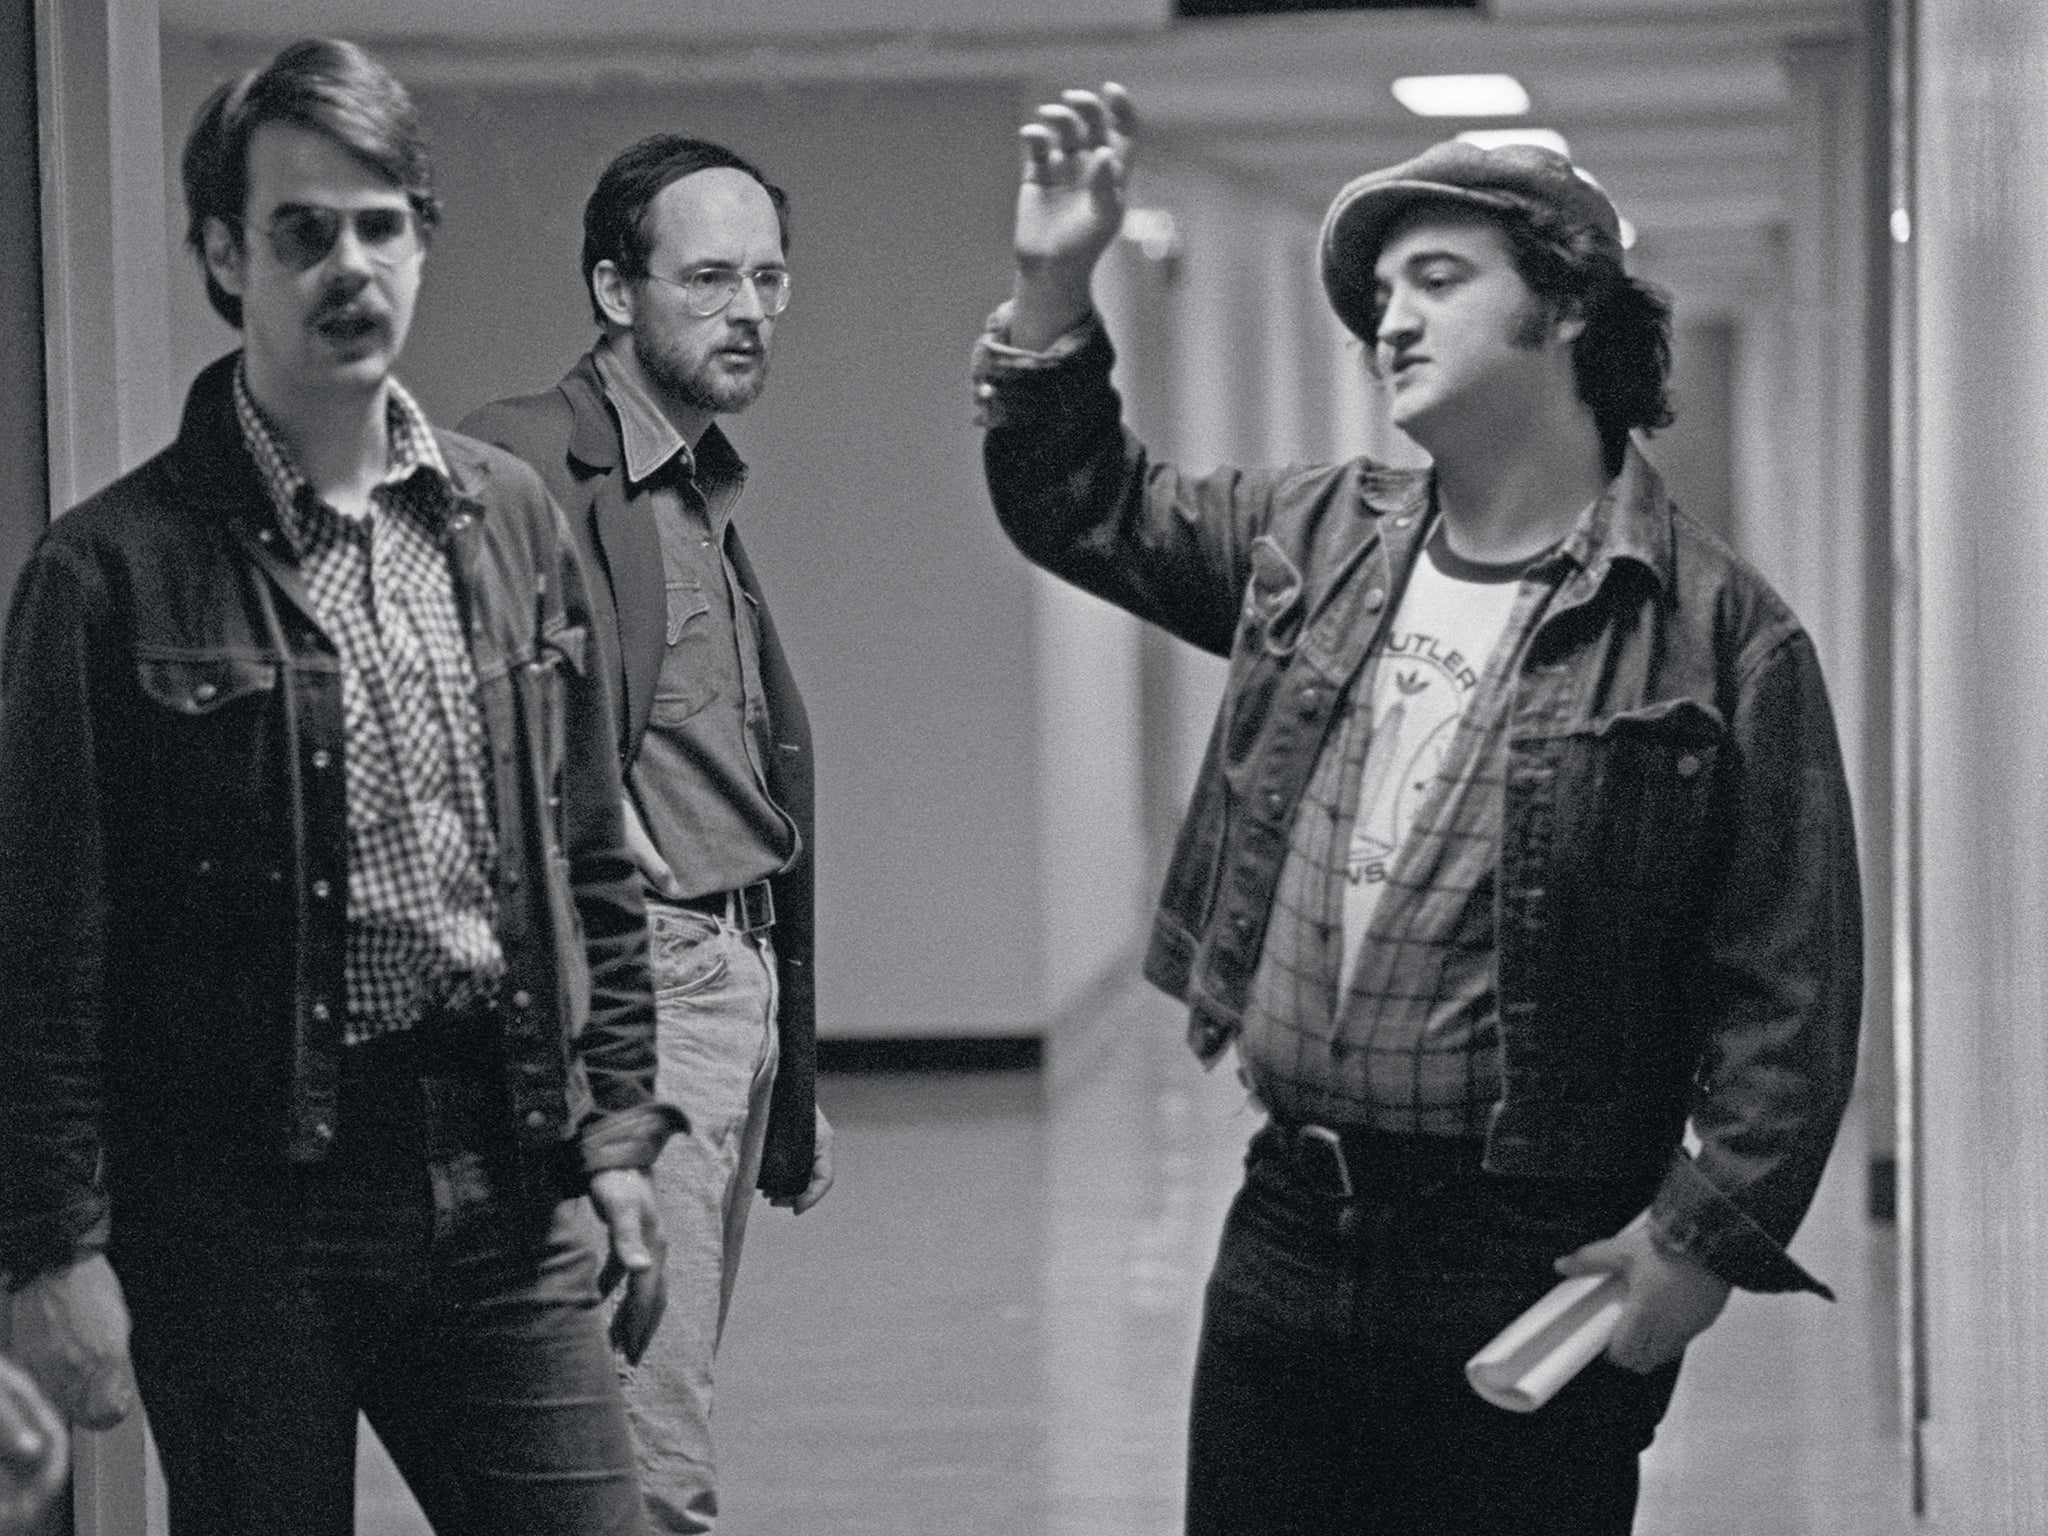 Dan Aykroyd, Michael O’Donoghue, and John Belushi during the early years of Saturday Night Live